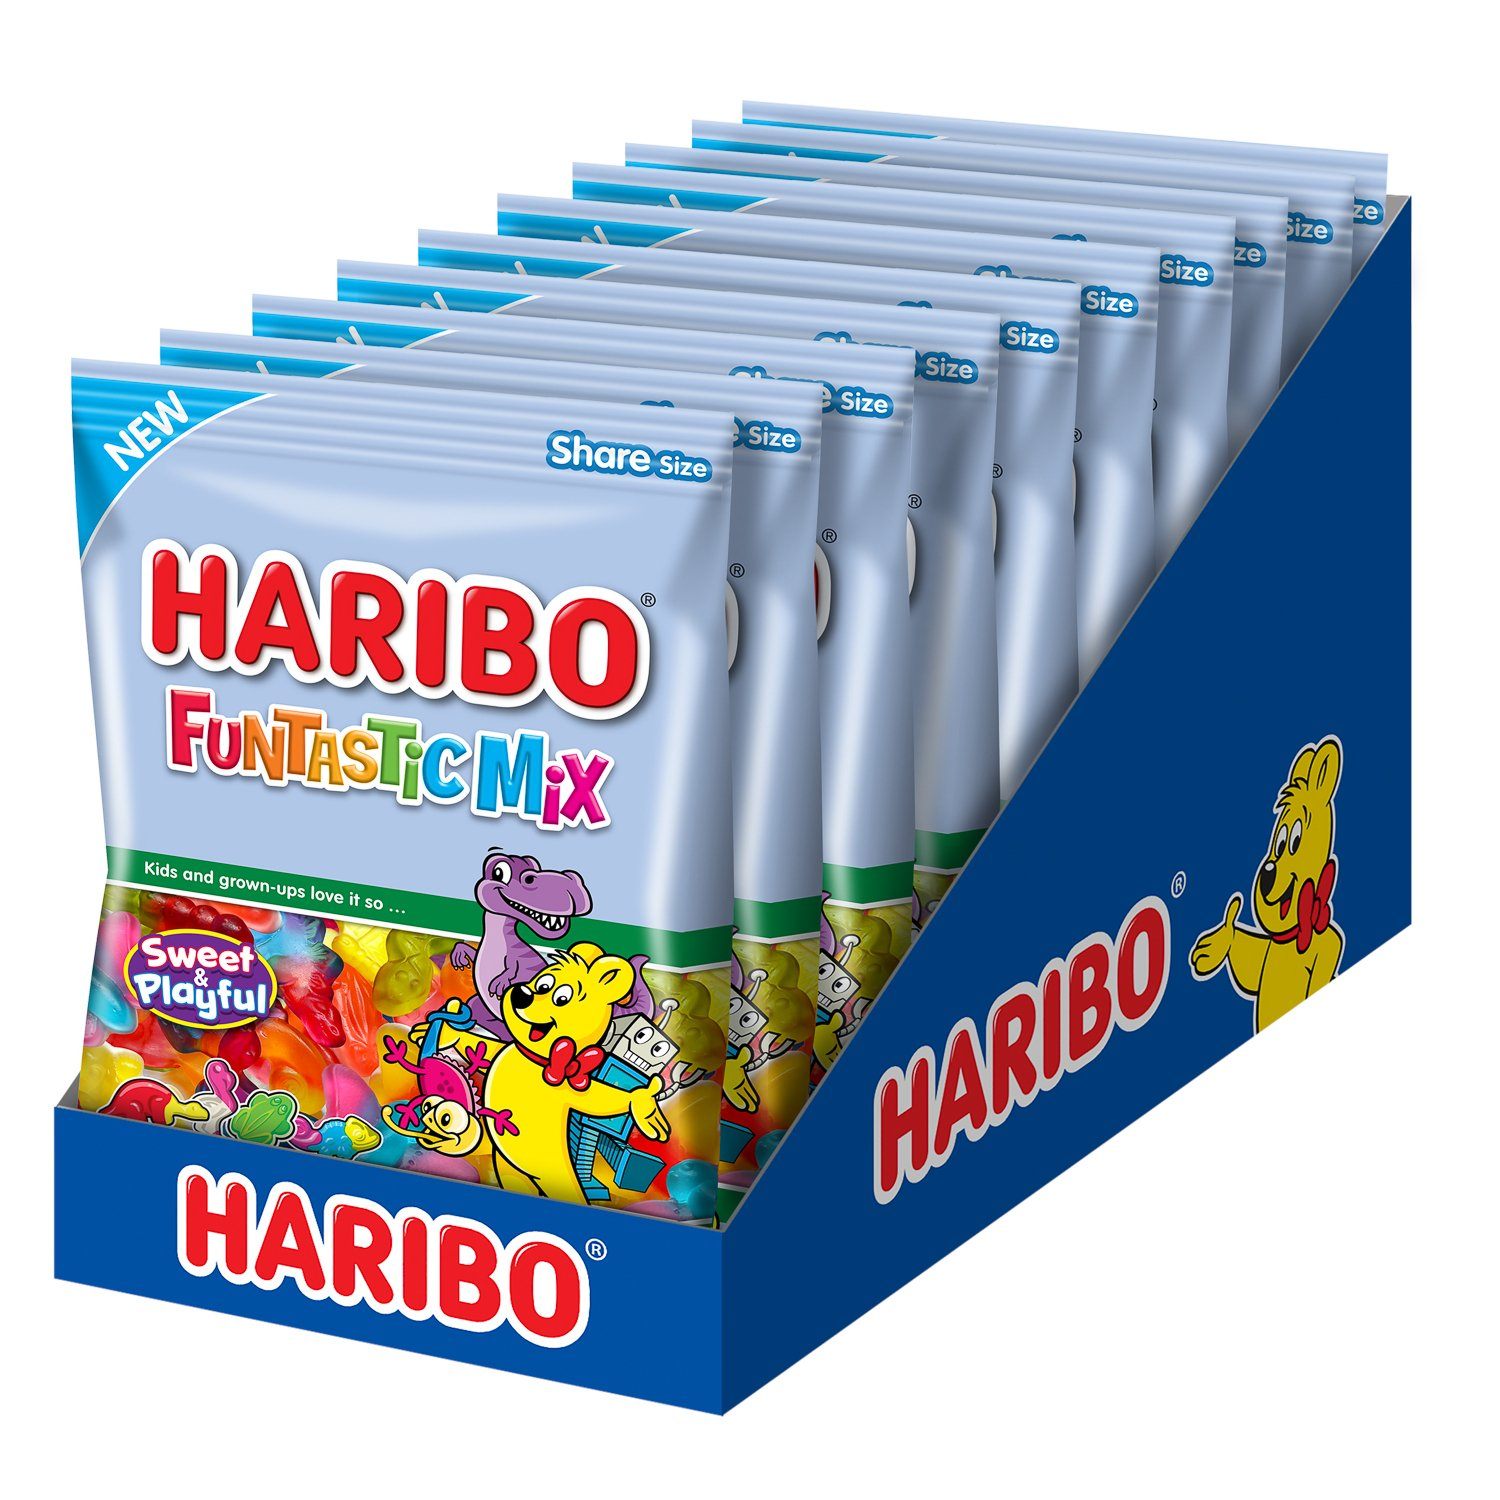 Haribo Gummi Candies Meltable Haribo Funtastic Mix 8 Oz-10 Count 